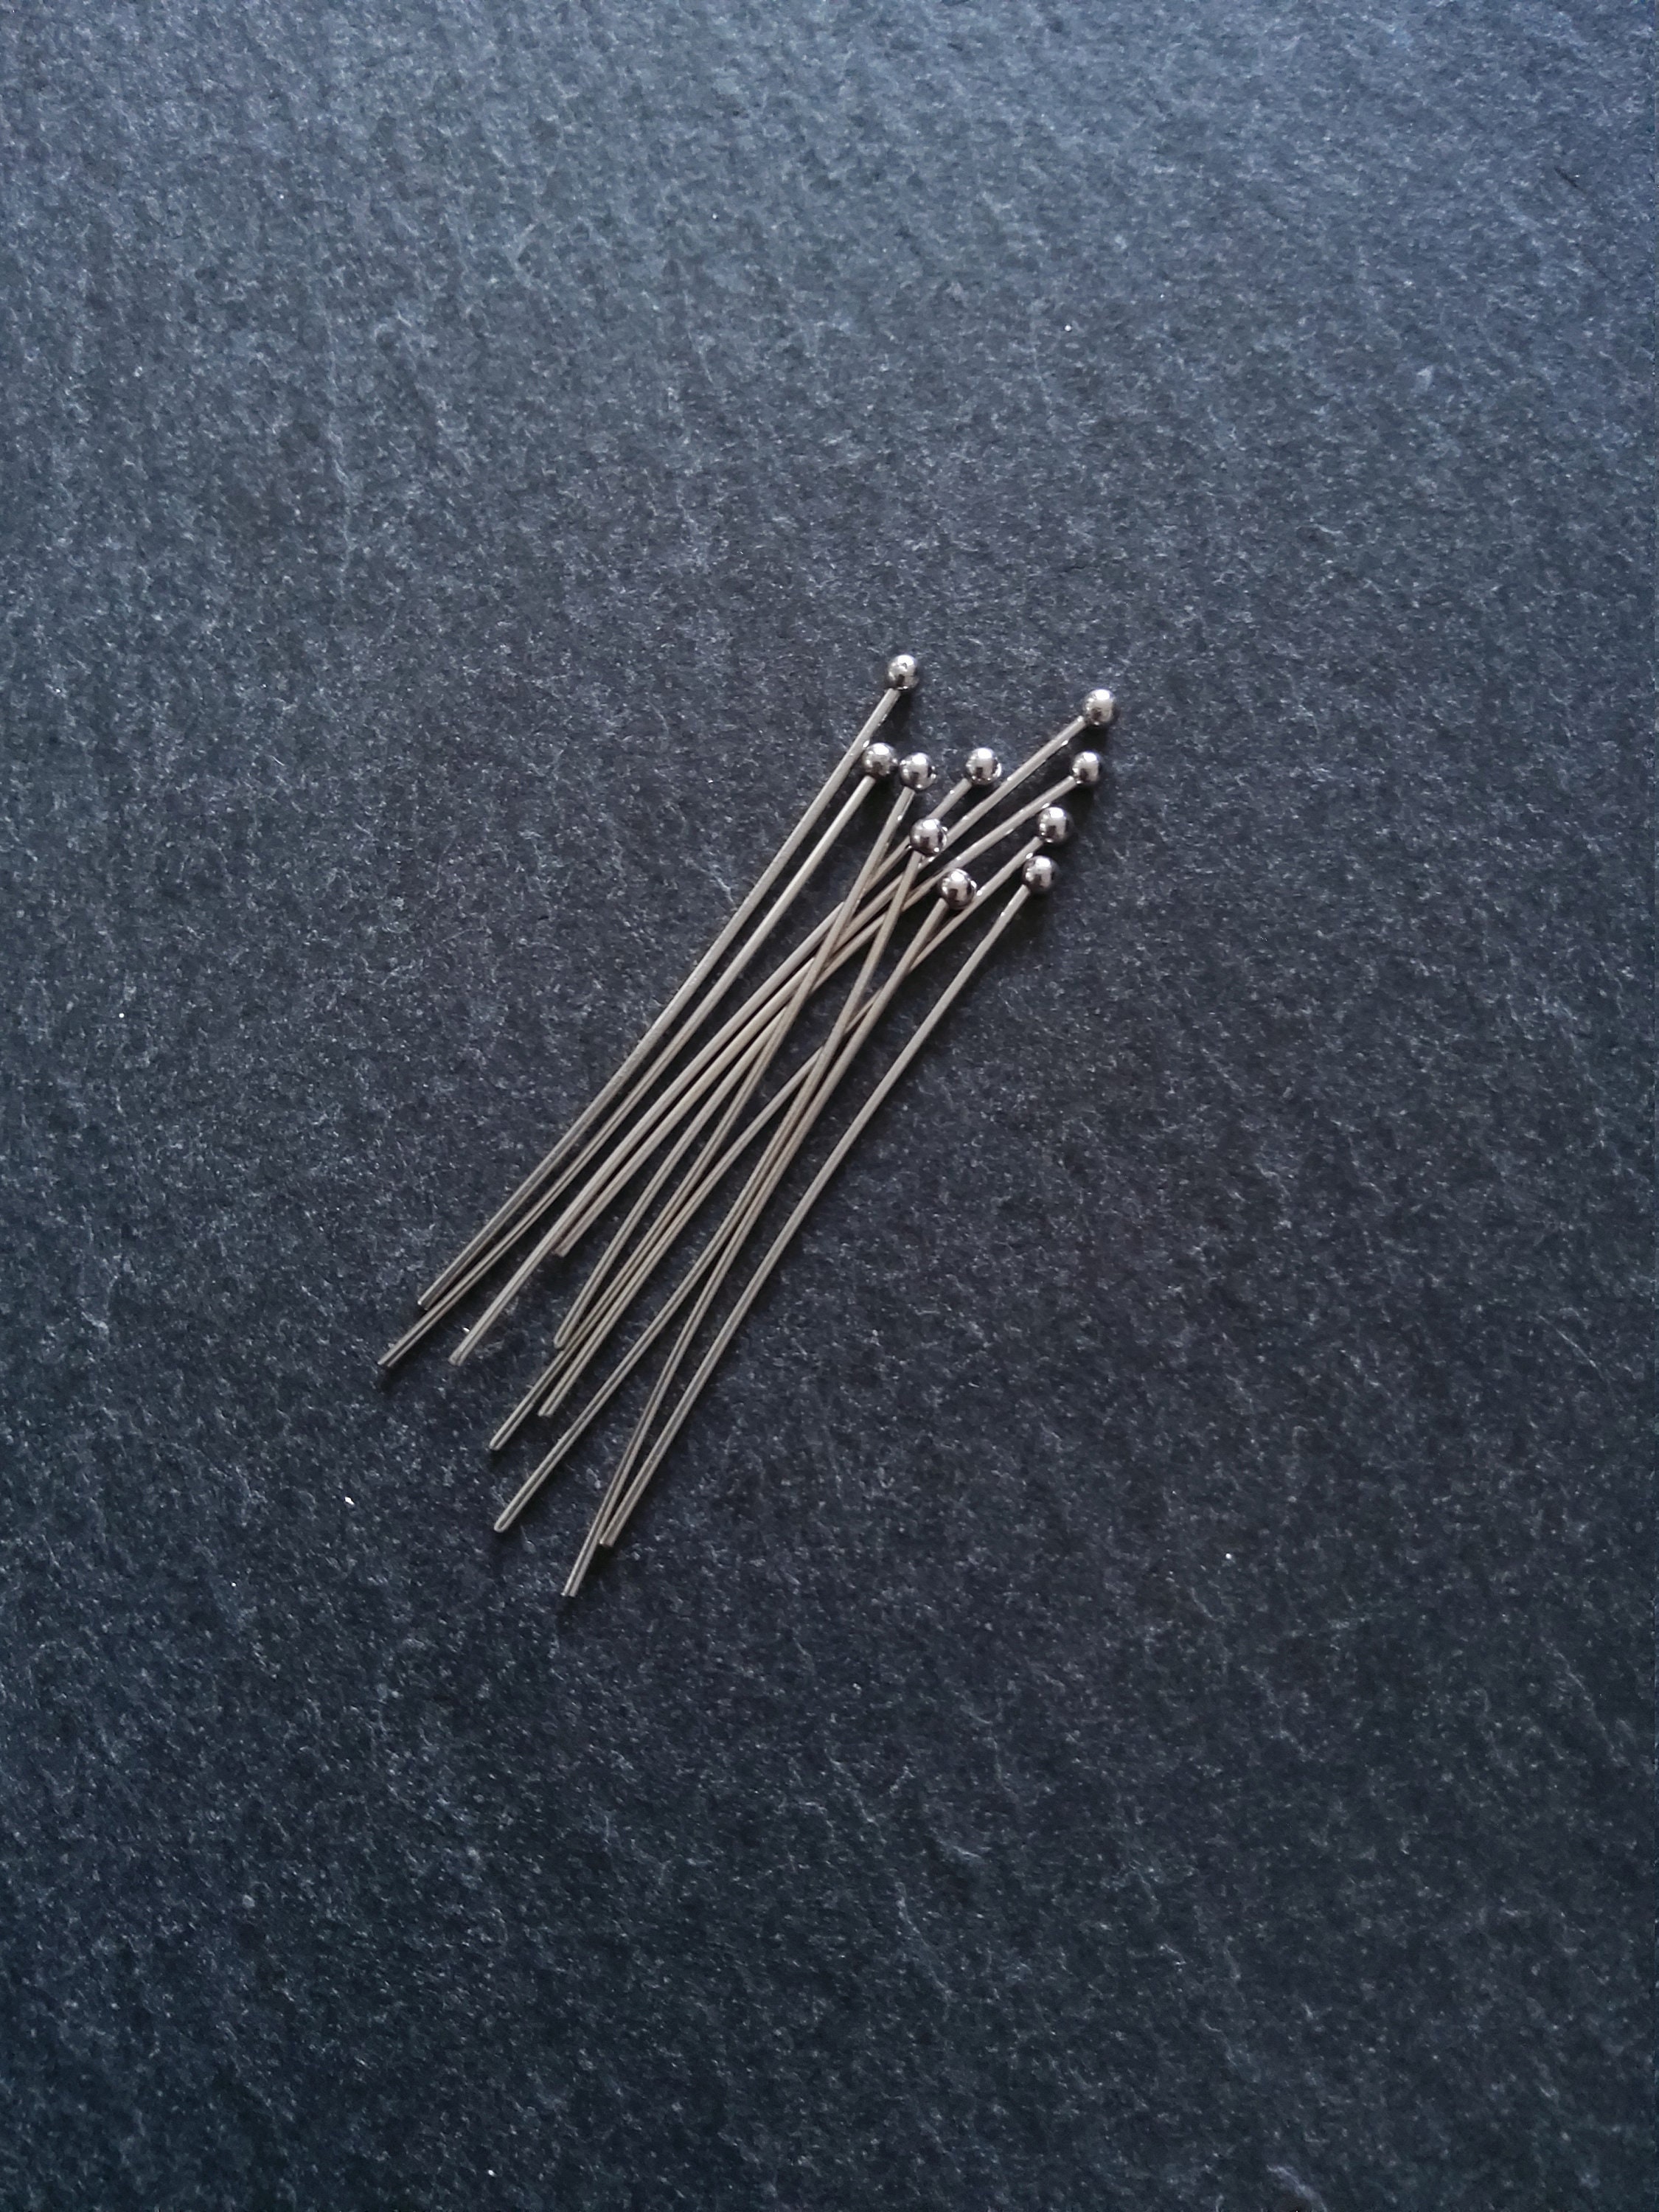 Taylor Seville Magic Pins - Flat Head Patchwork Pins - Extra Long